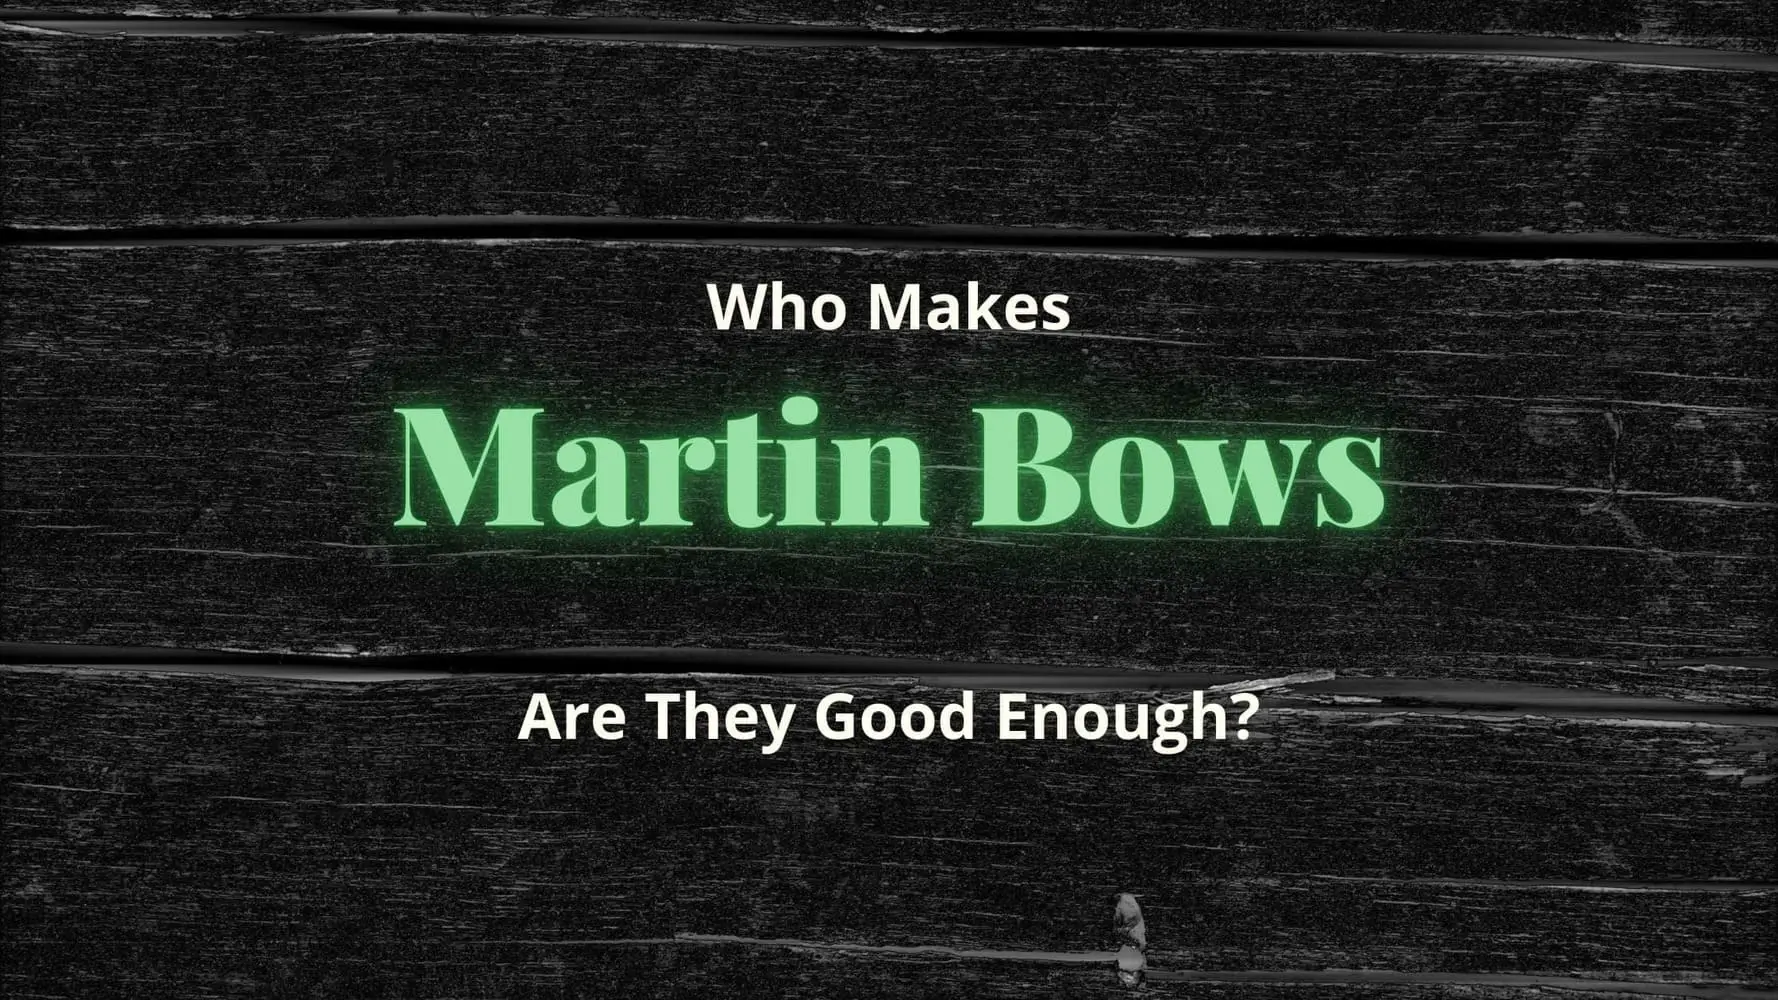 Who Makes Martin Bows